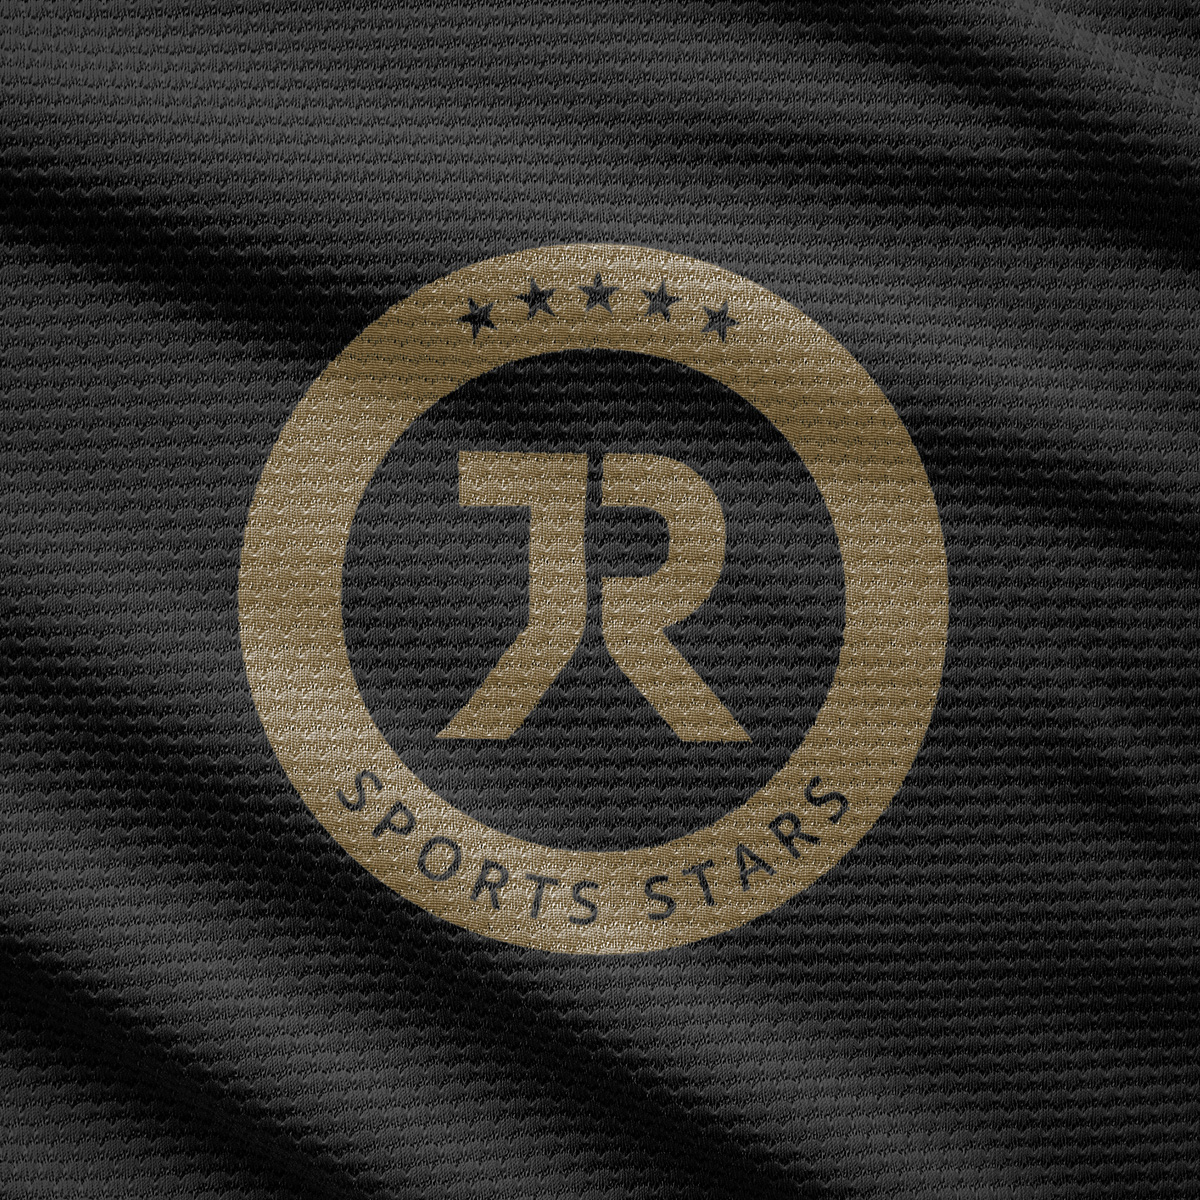 JR Sports Stars logo on clothing